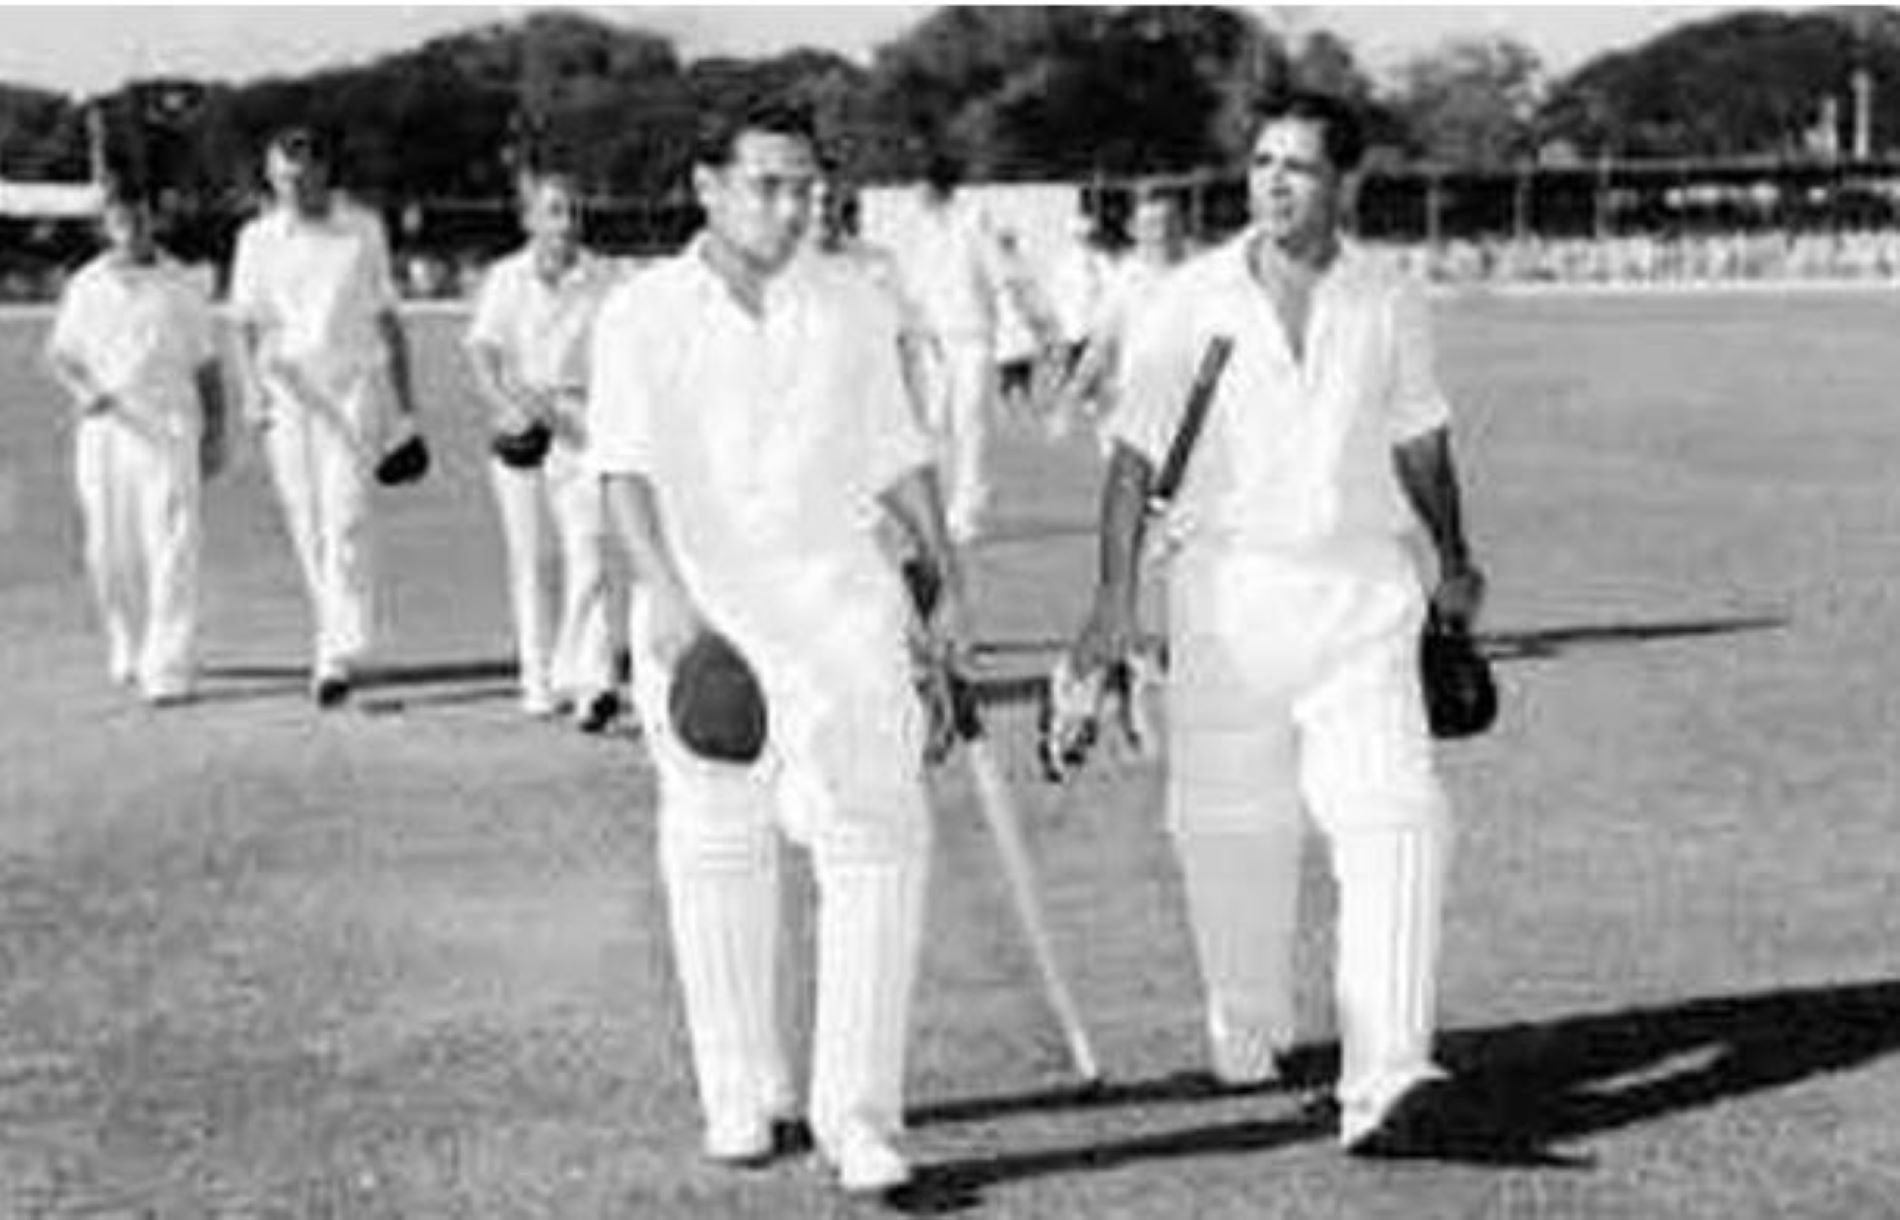 Pankaj Roy and Vinoo Mankad held the opening partnership record for over 50 years.